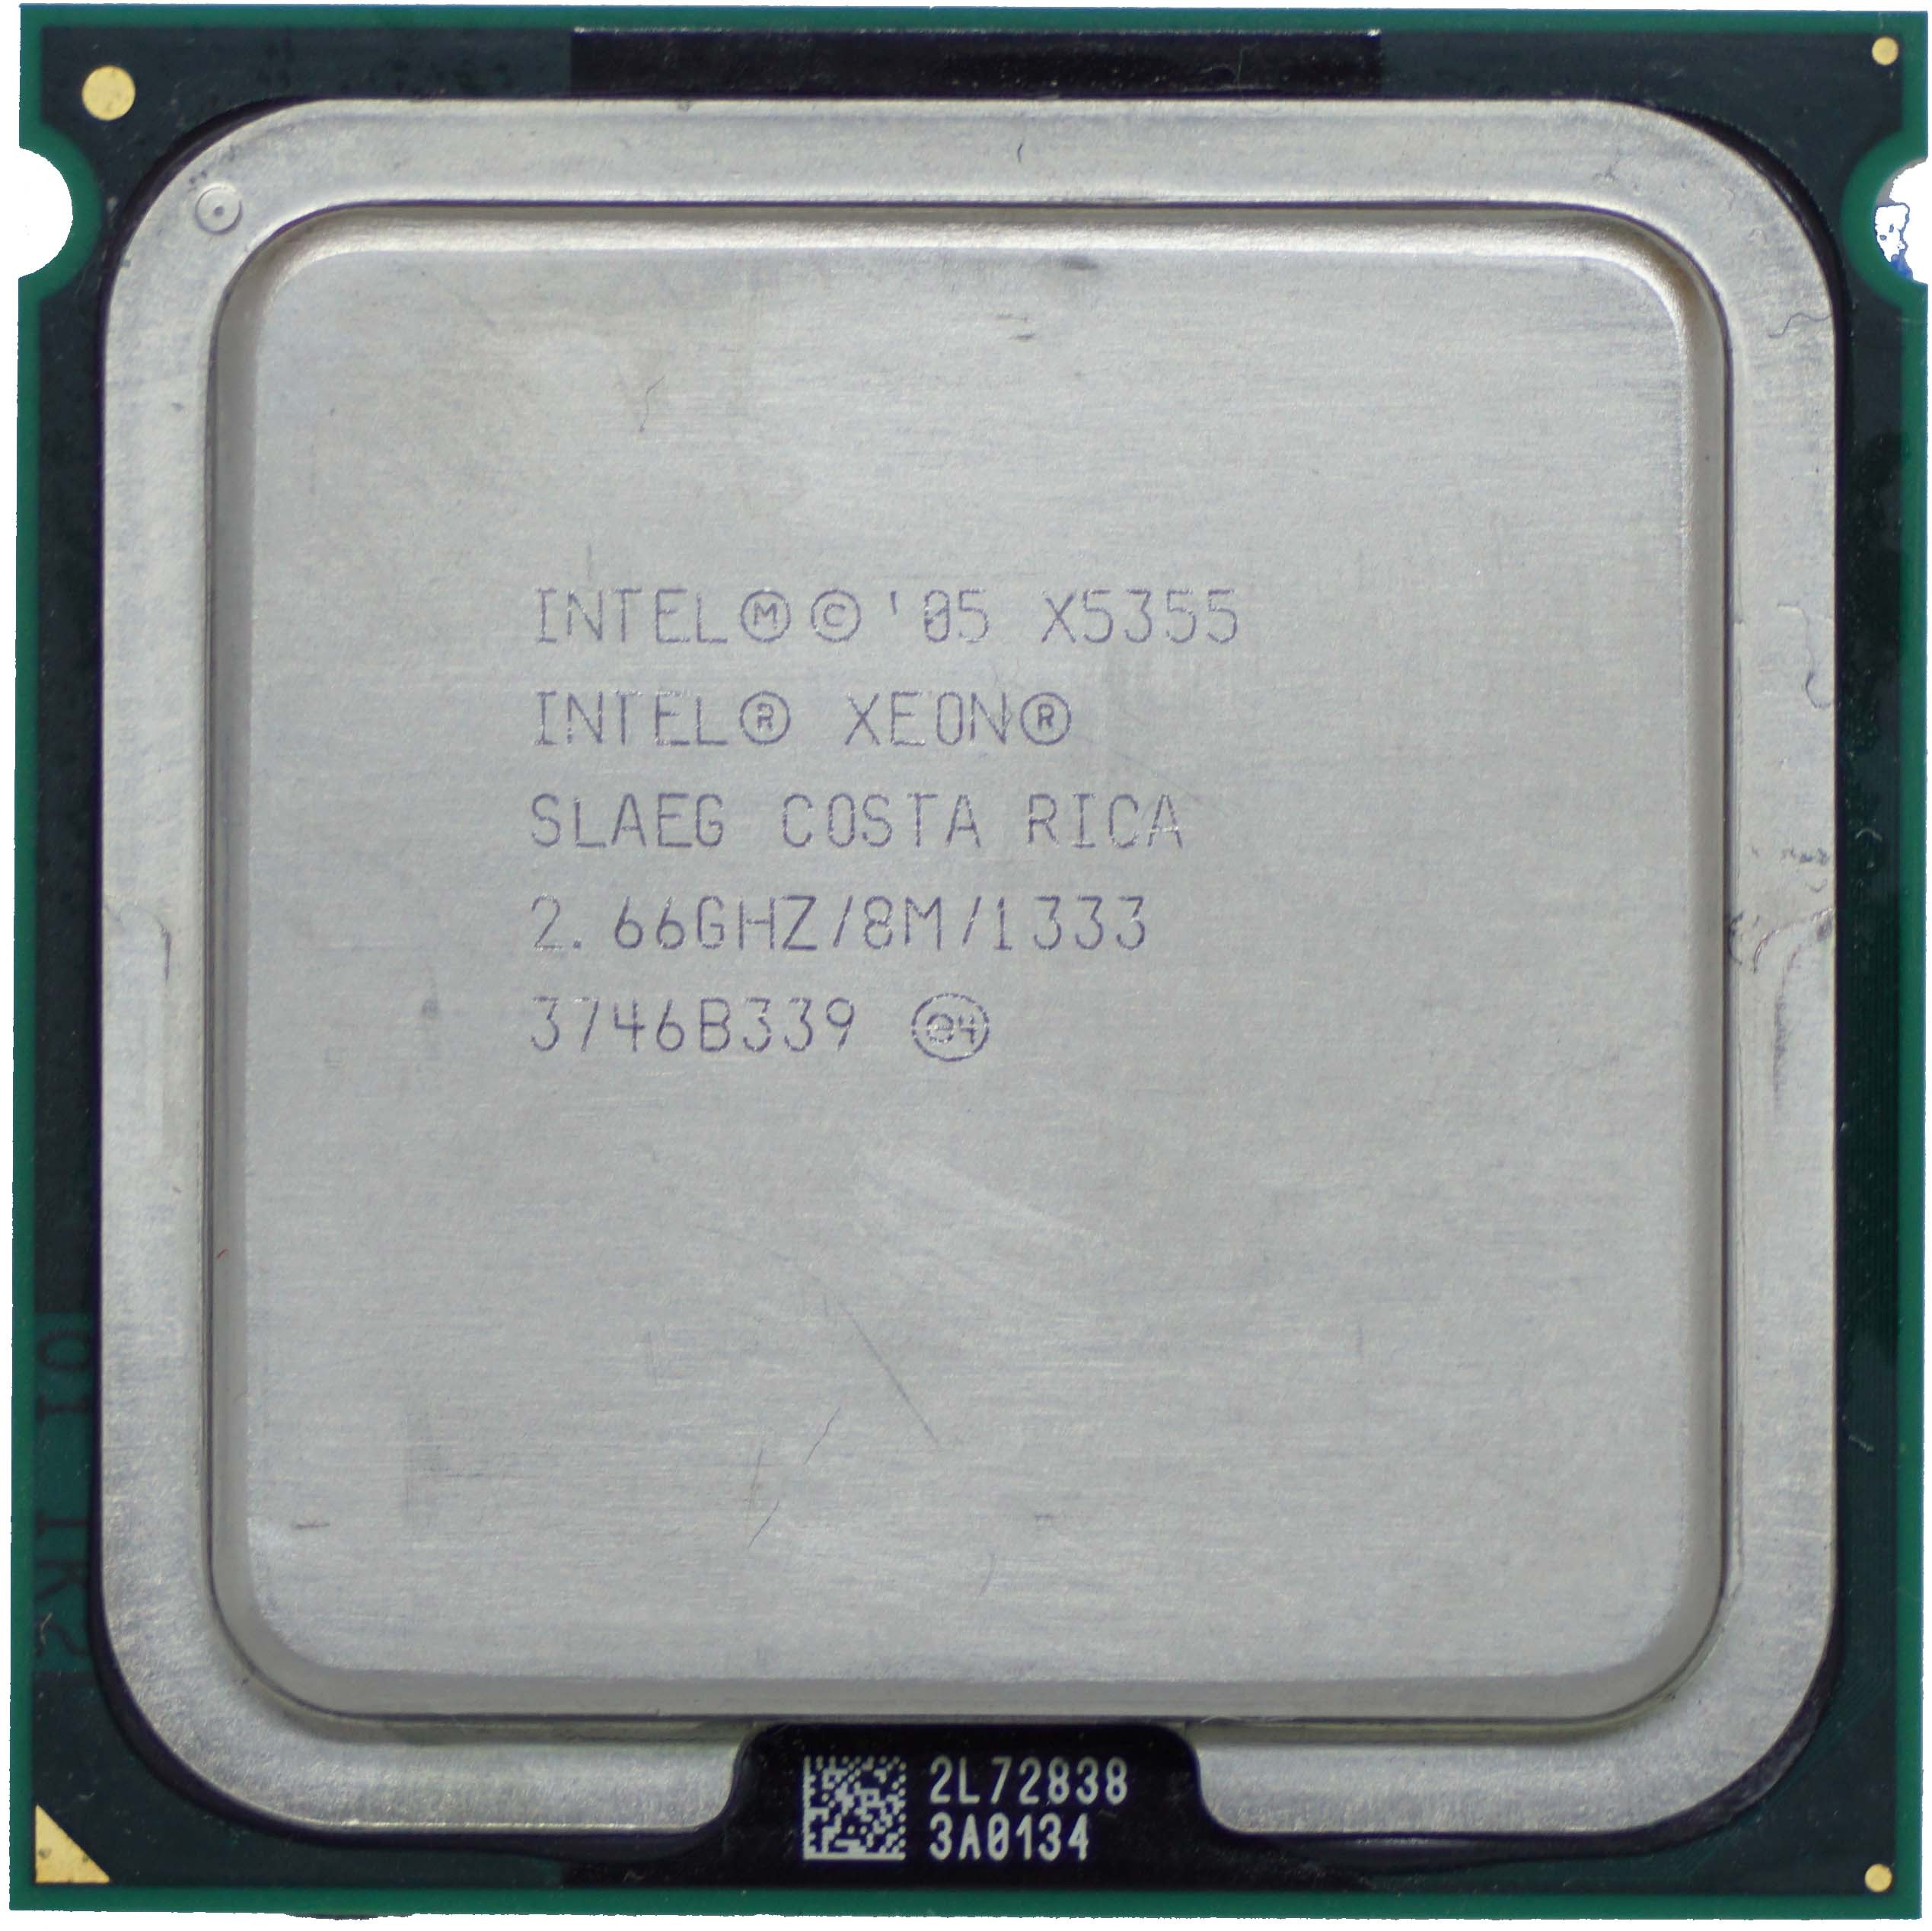 Intel Xeon X5355 (SLAEG) 4-Core 2.66GHz LGA771 8MB 120W CPU Processor